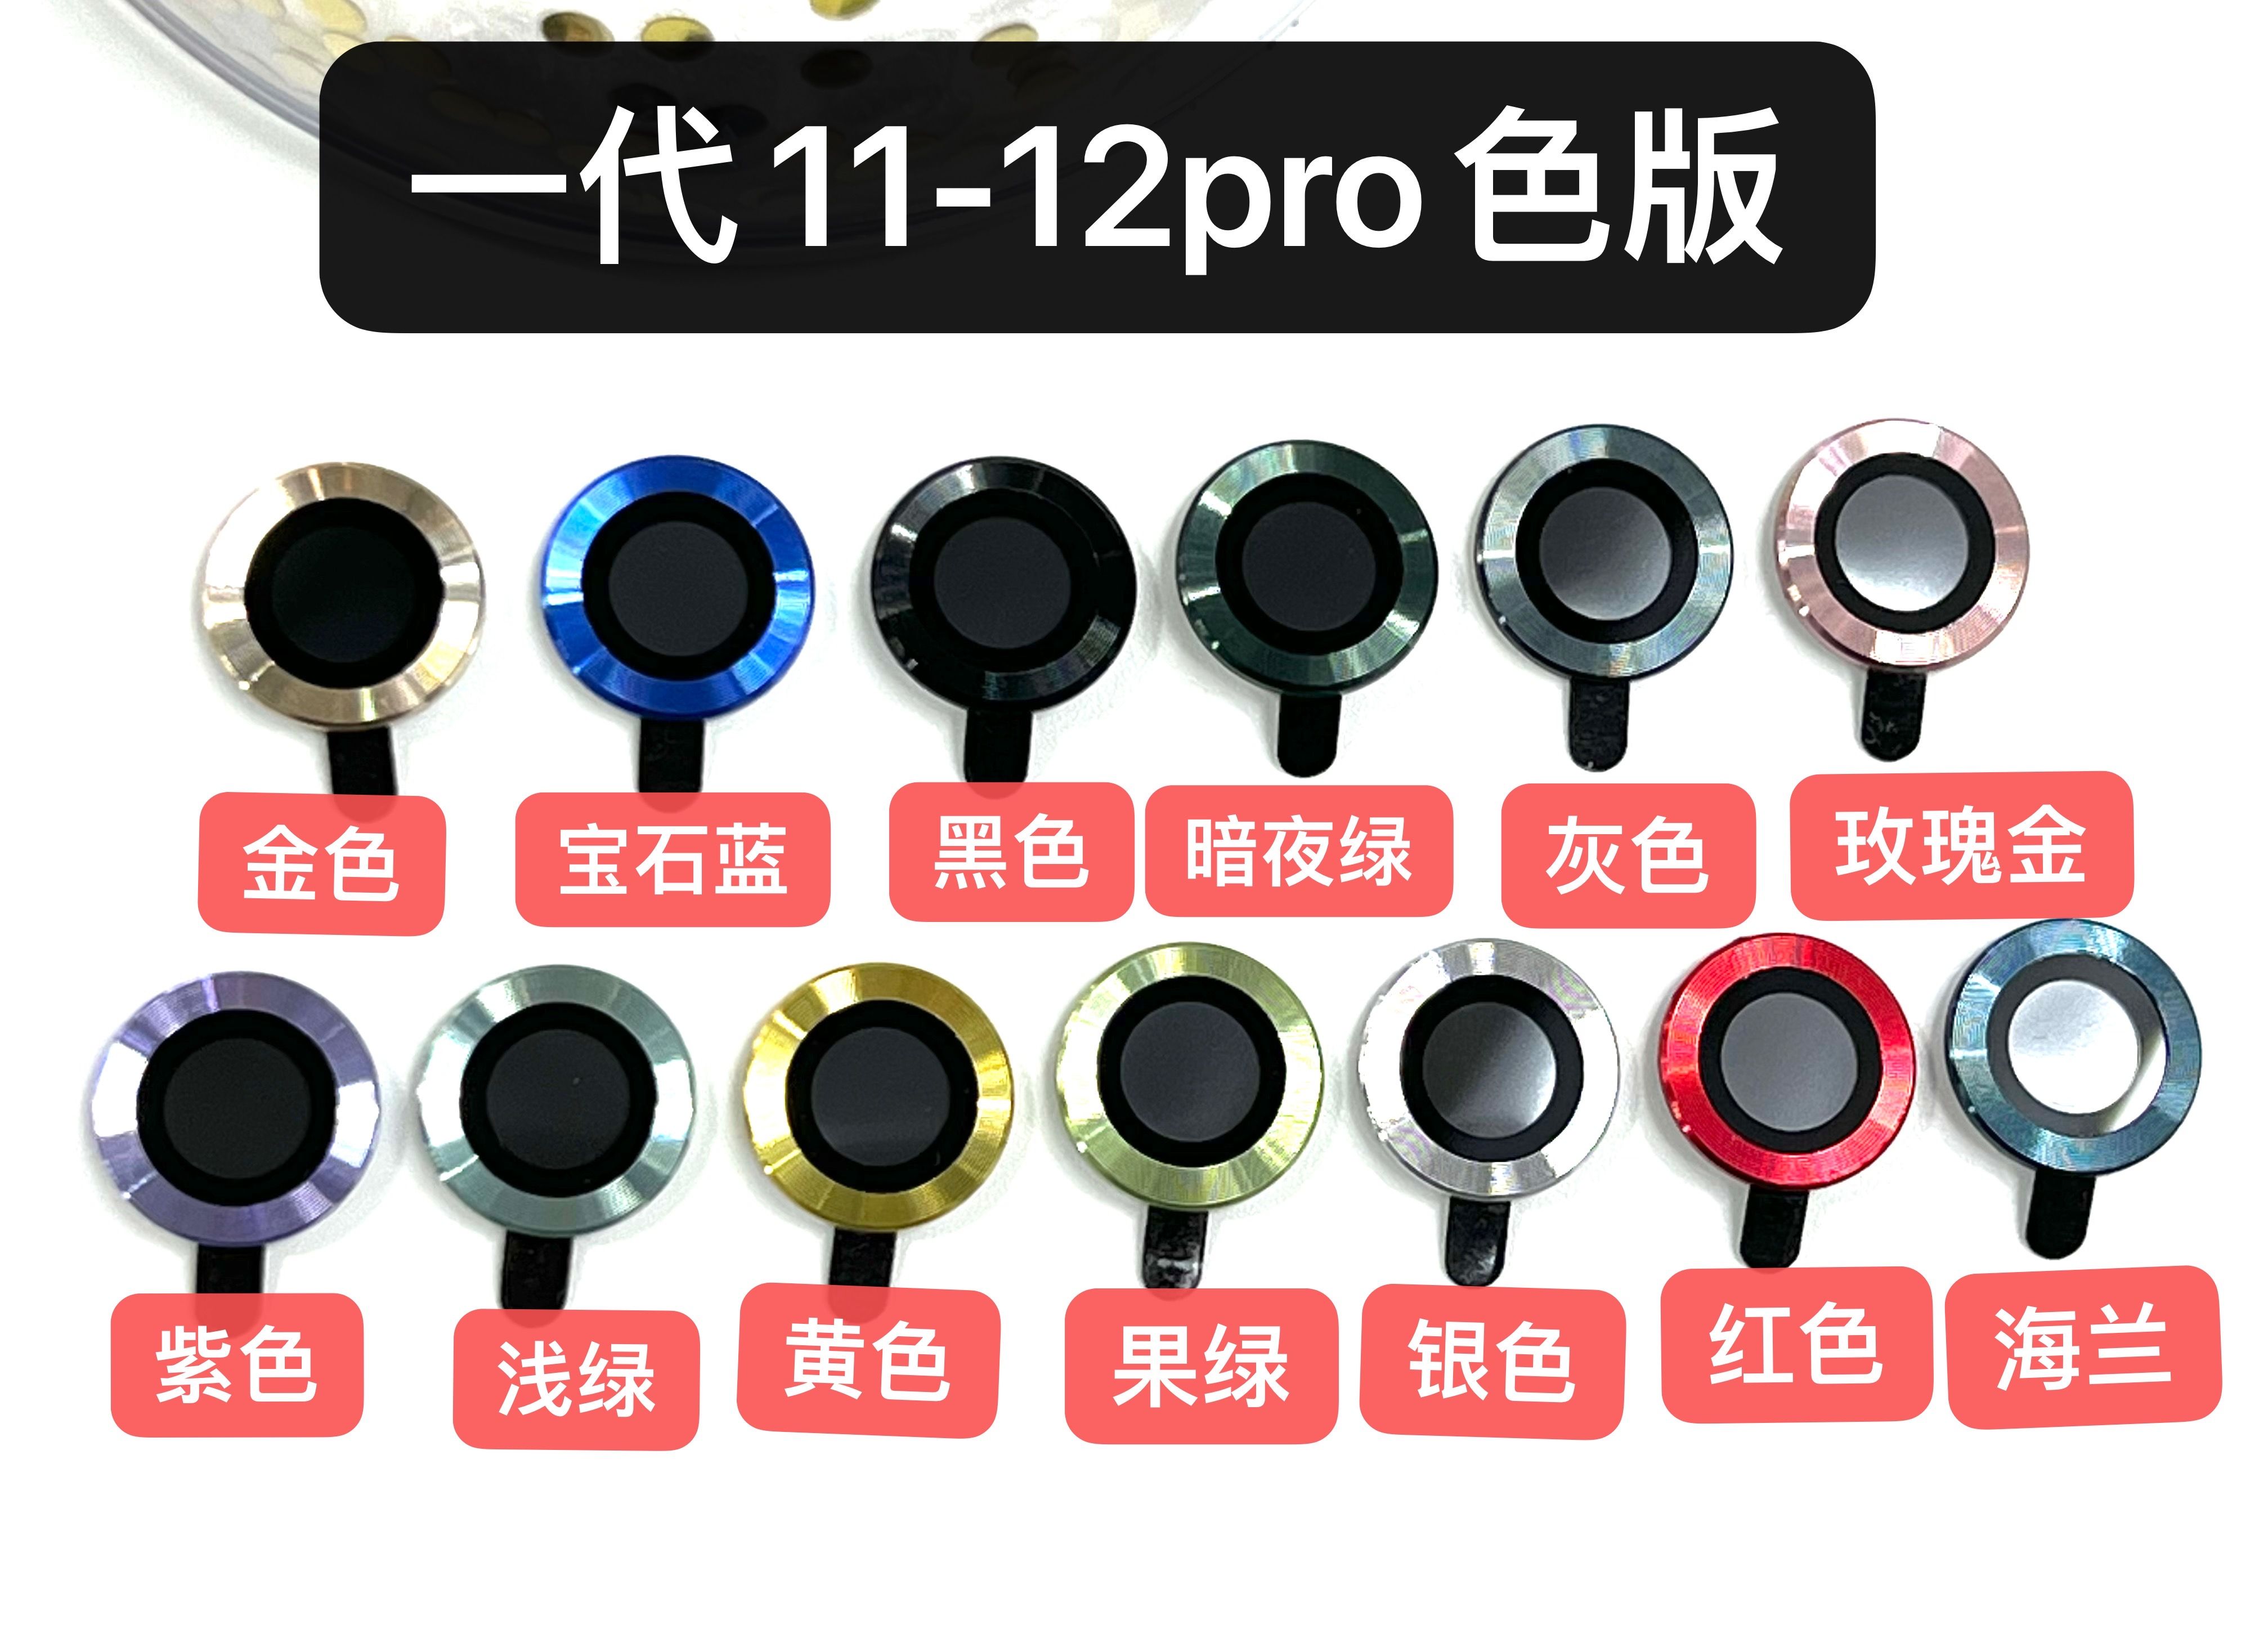 for 11 pro/11 pro max/12 pro(3 lens)